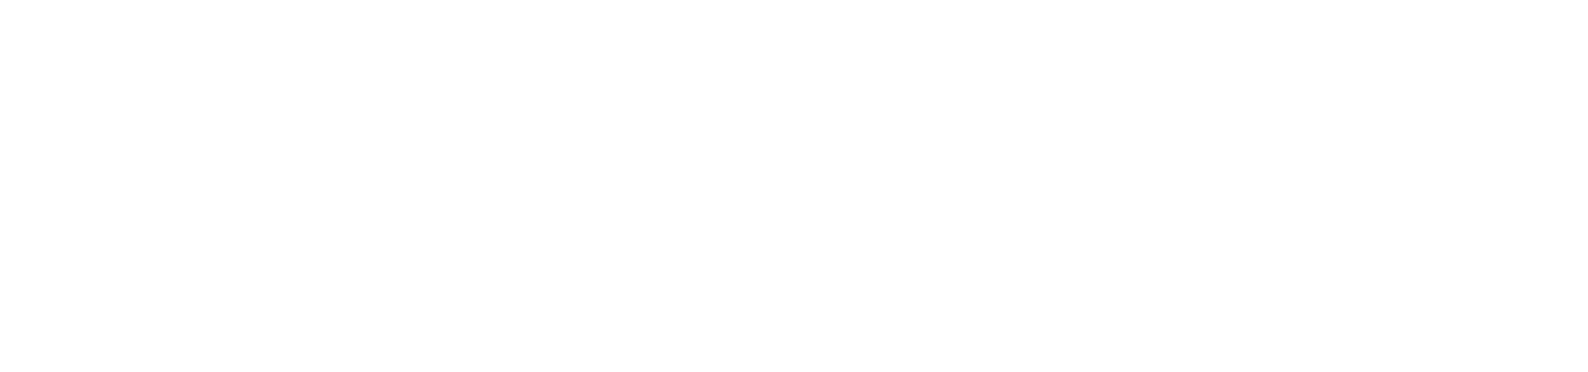 Alumina Limited logo grand pour les fonds sombres (PNG transparent)